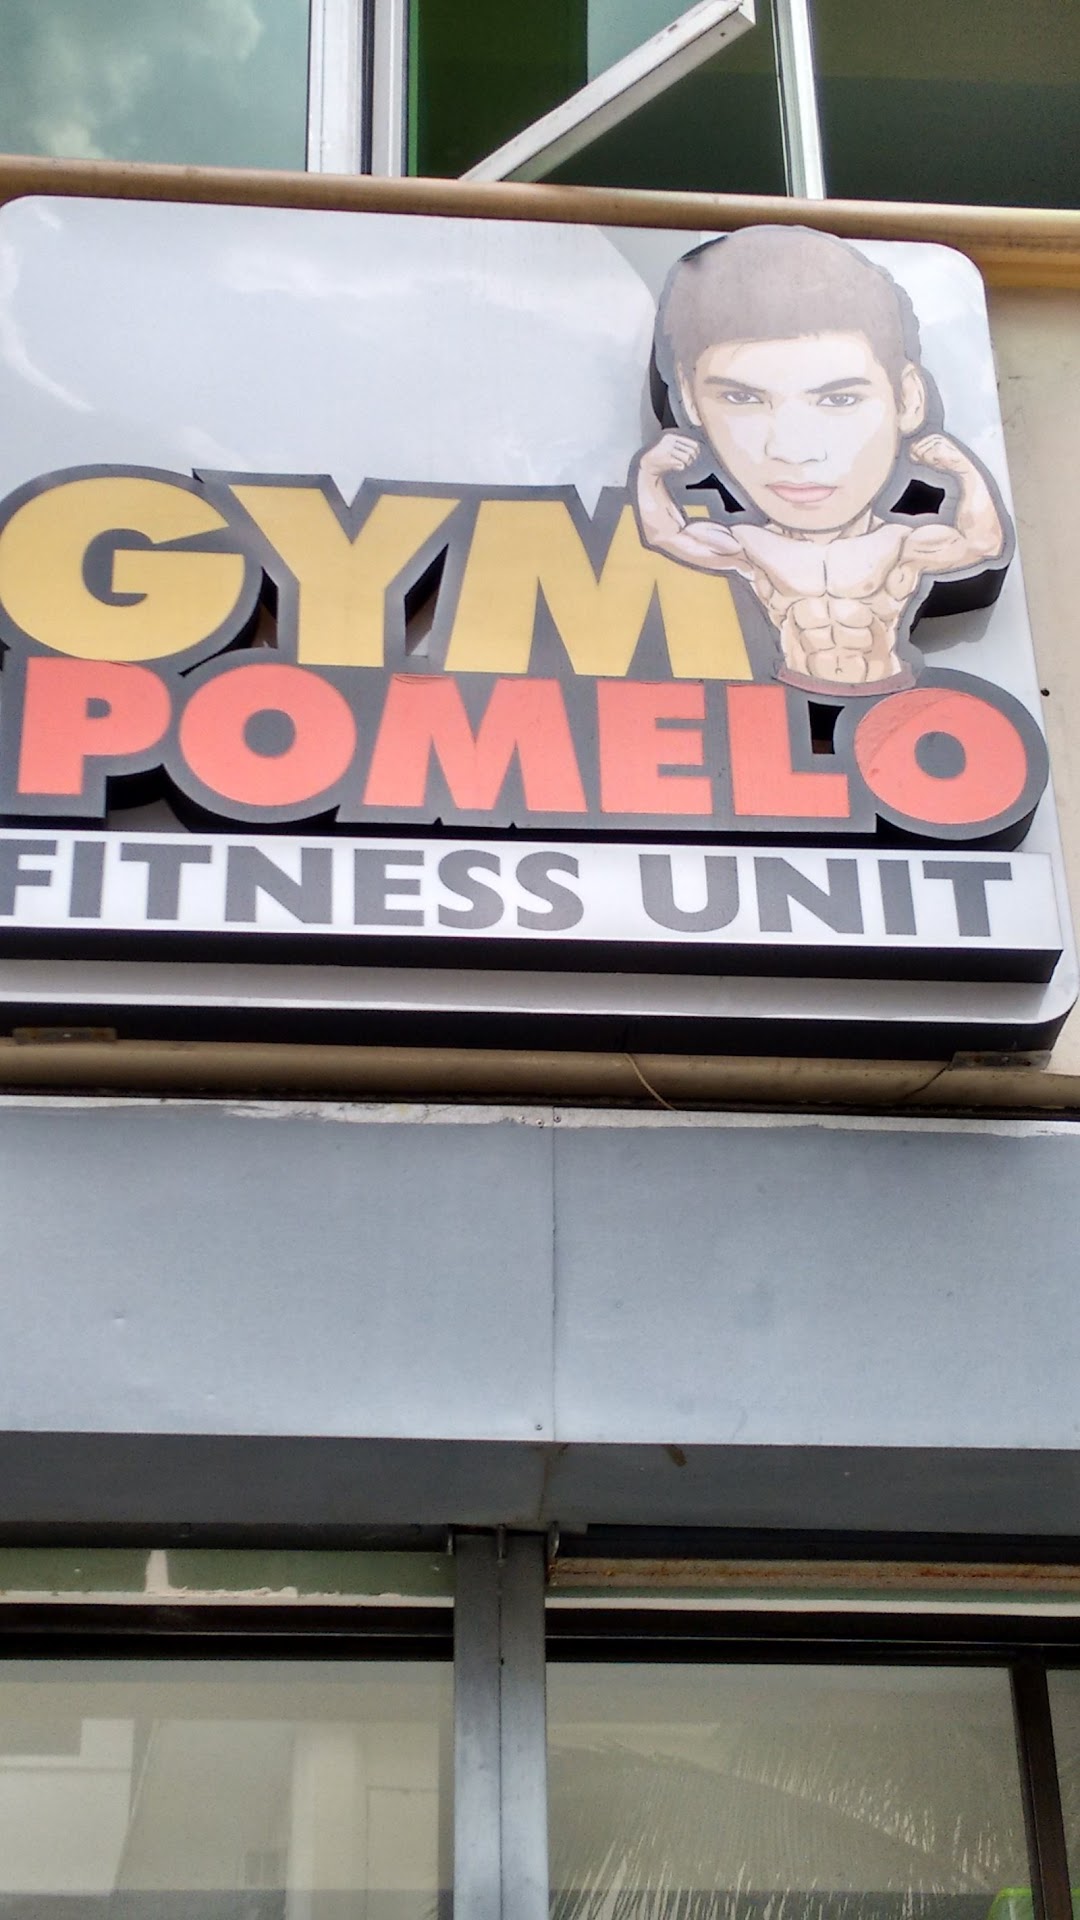 Gym Pomelo Fitness Unit